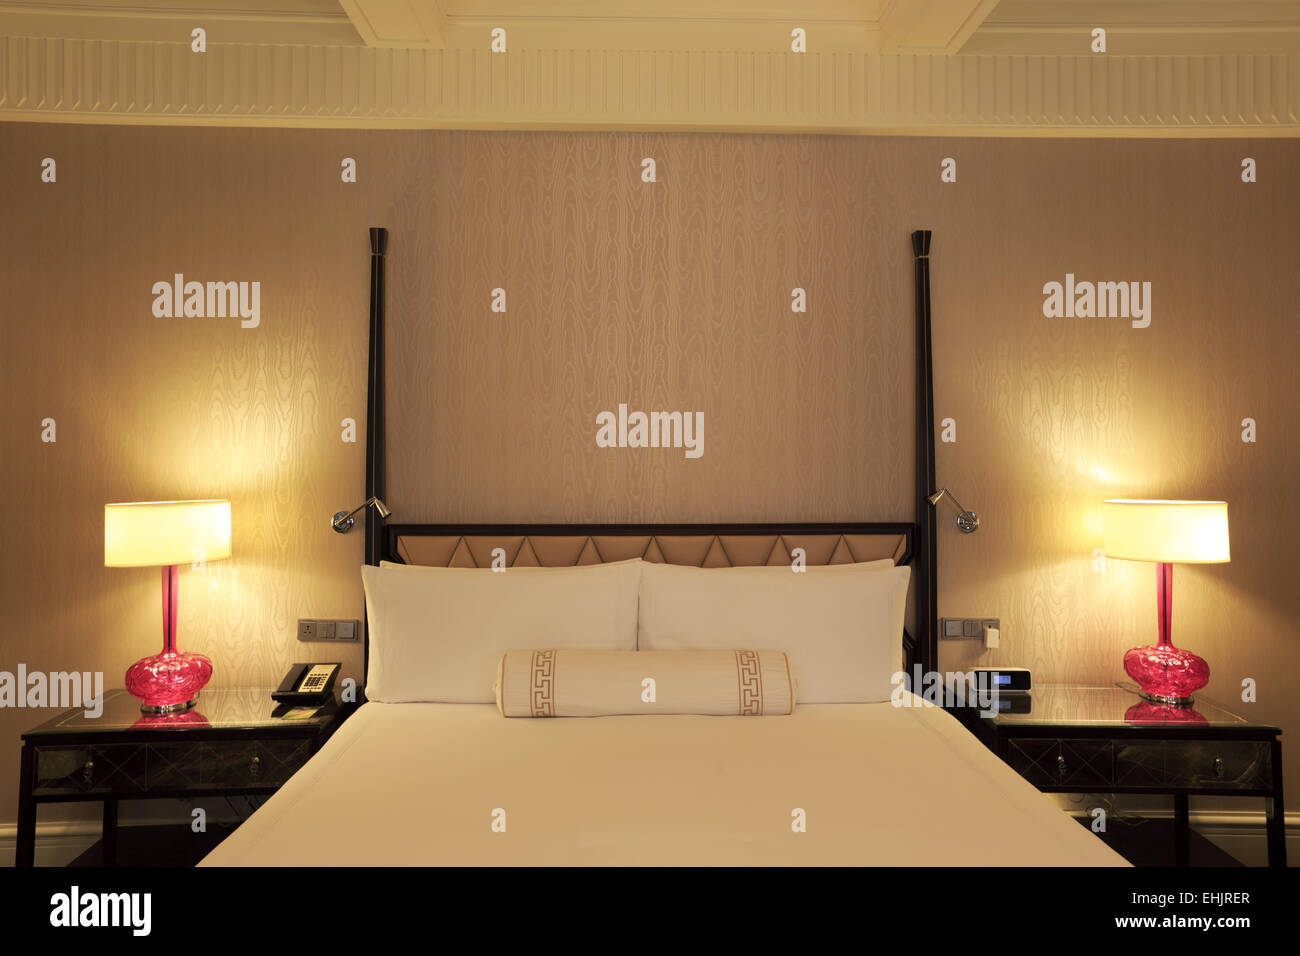 Standard room of Fairmont Peace Hotel, Shanghai, China Stock Photo